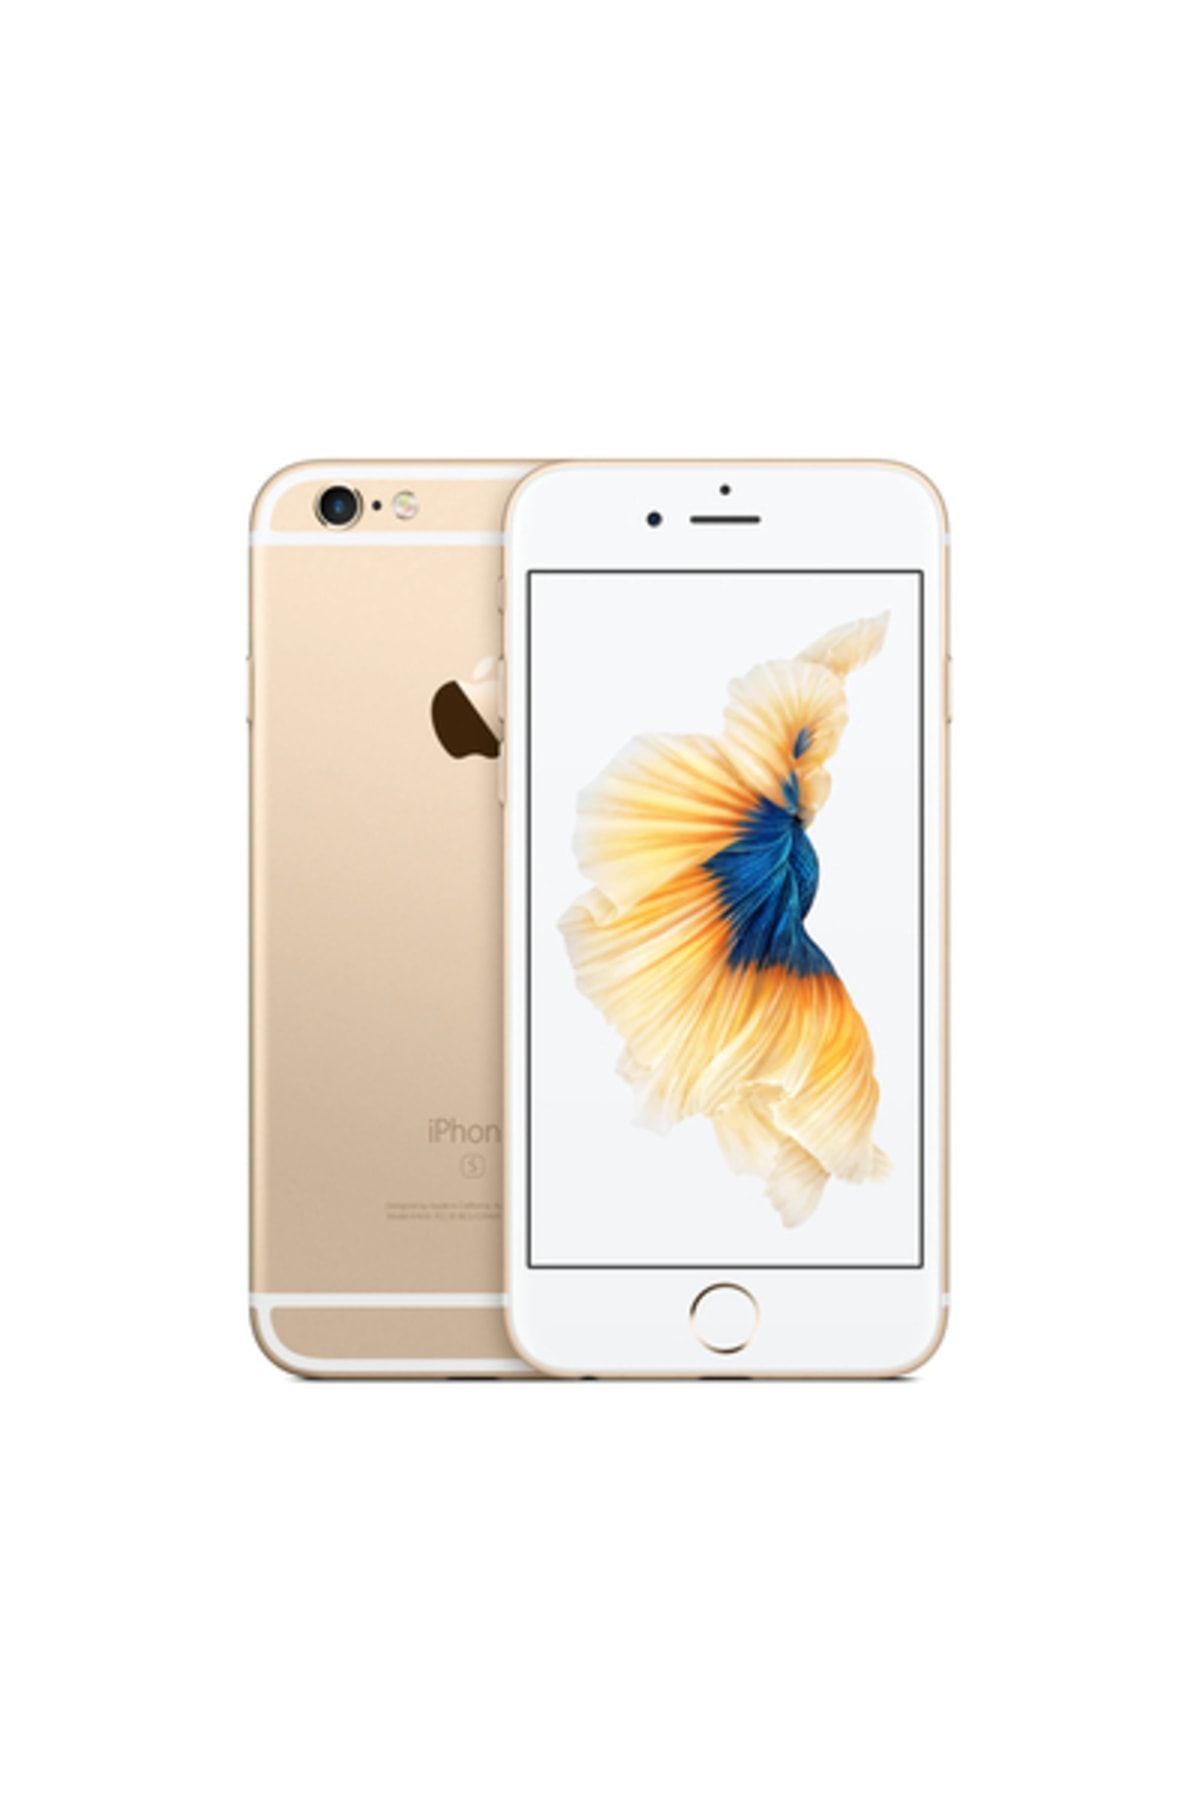 Apple Yenilenmiş iPhone 6s 64 GB Altın 64 GB Altın A Grade